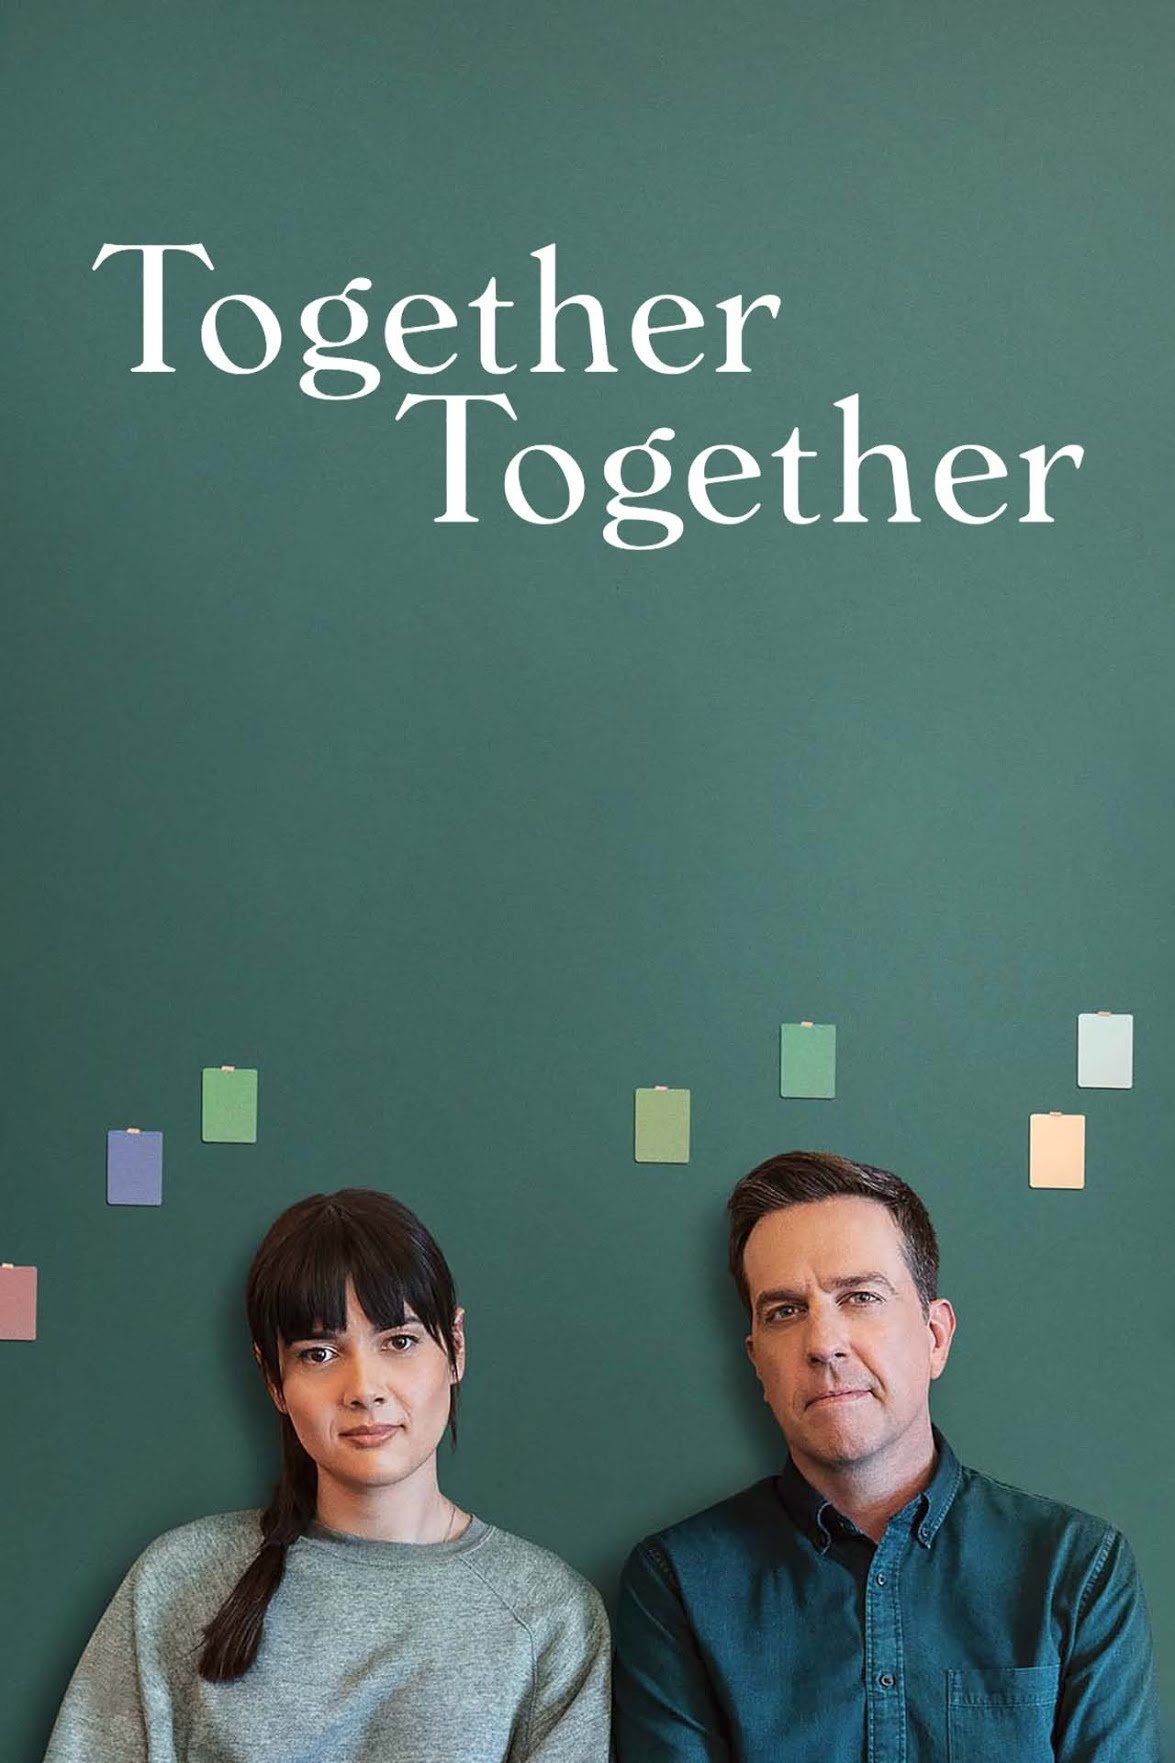 Together Together Movie Actors Cast Director Producer Roles Box